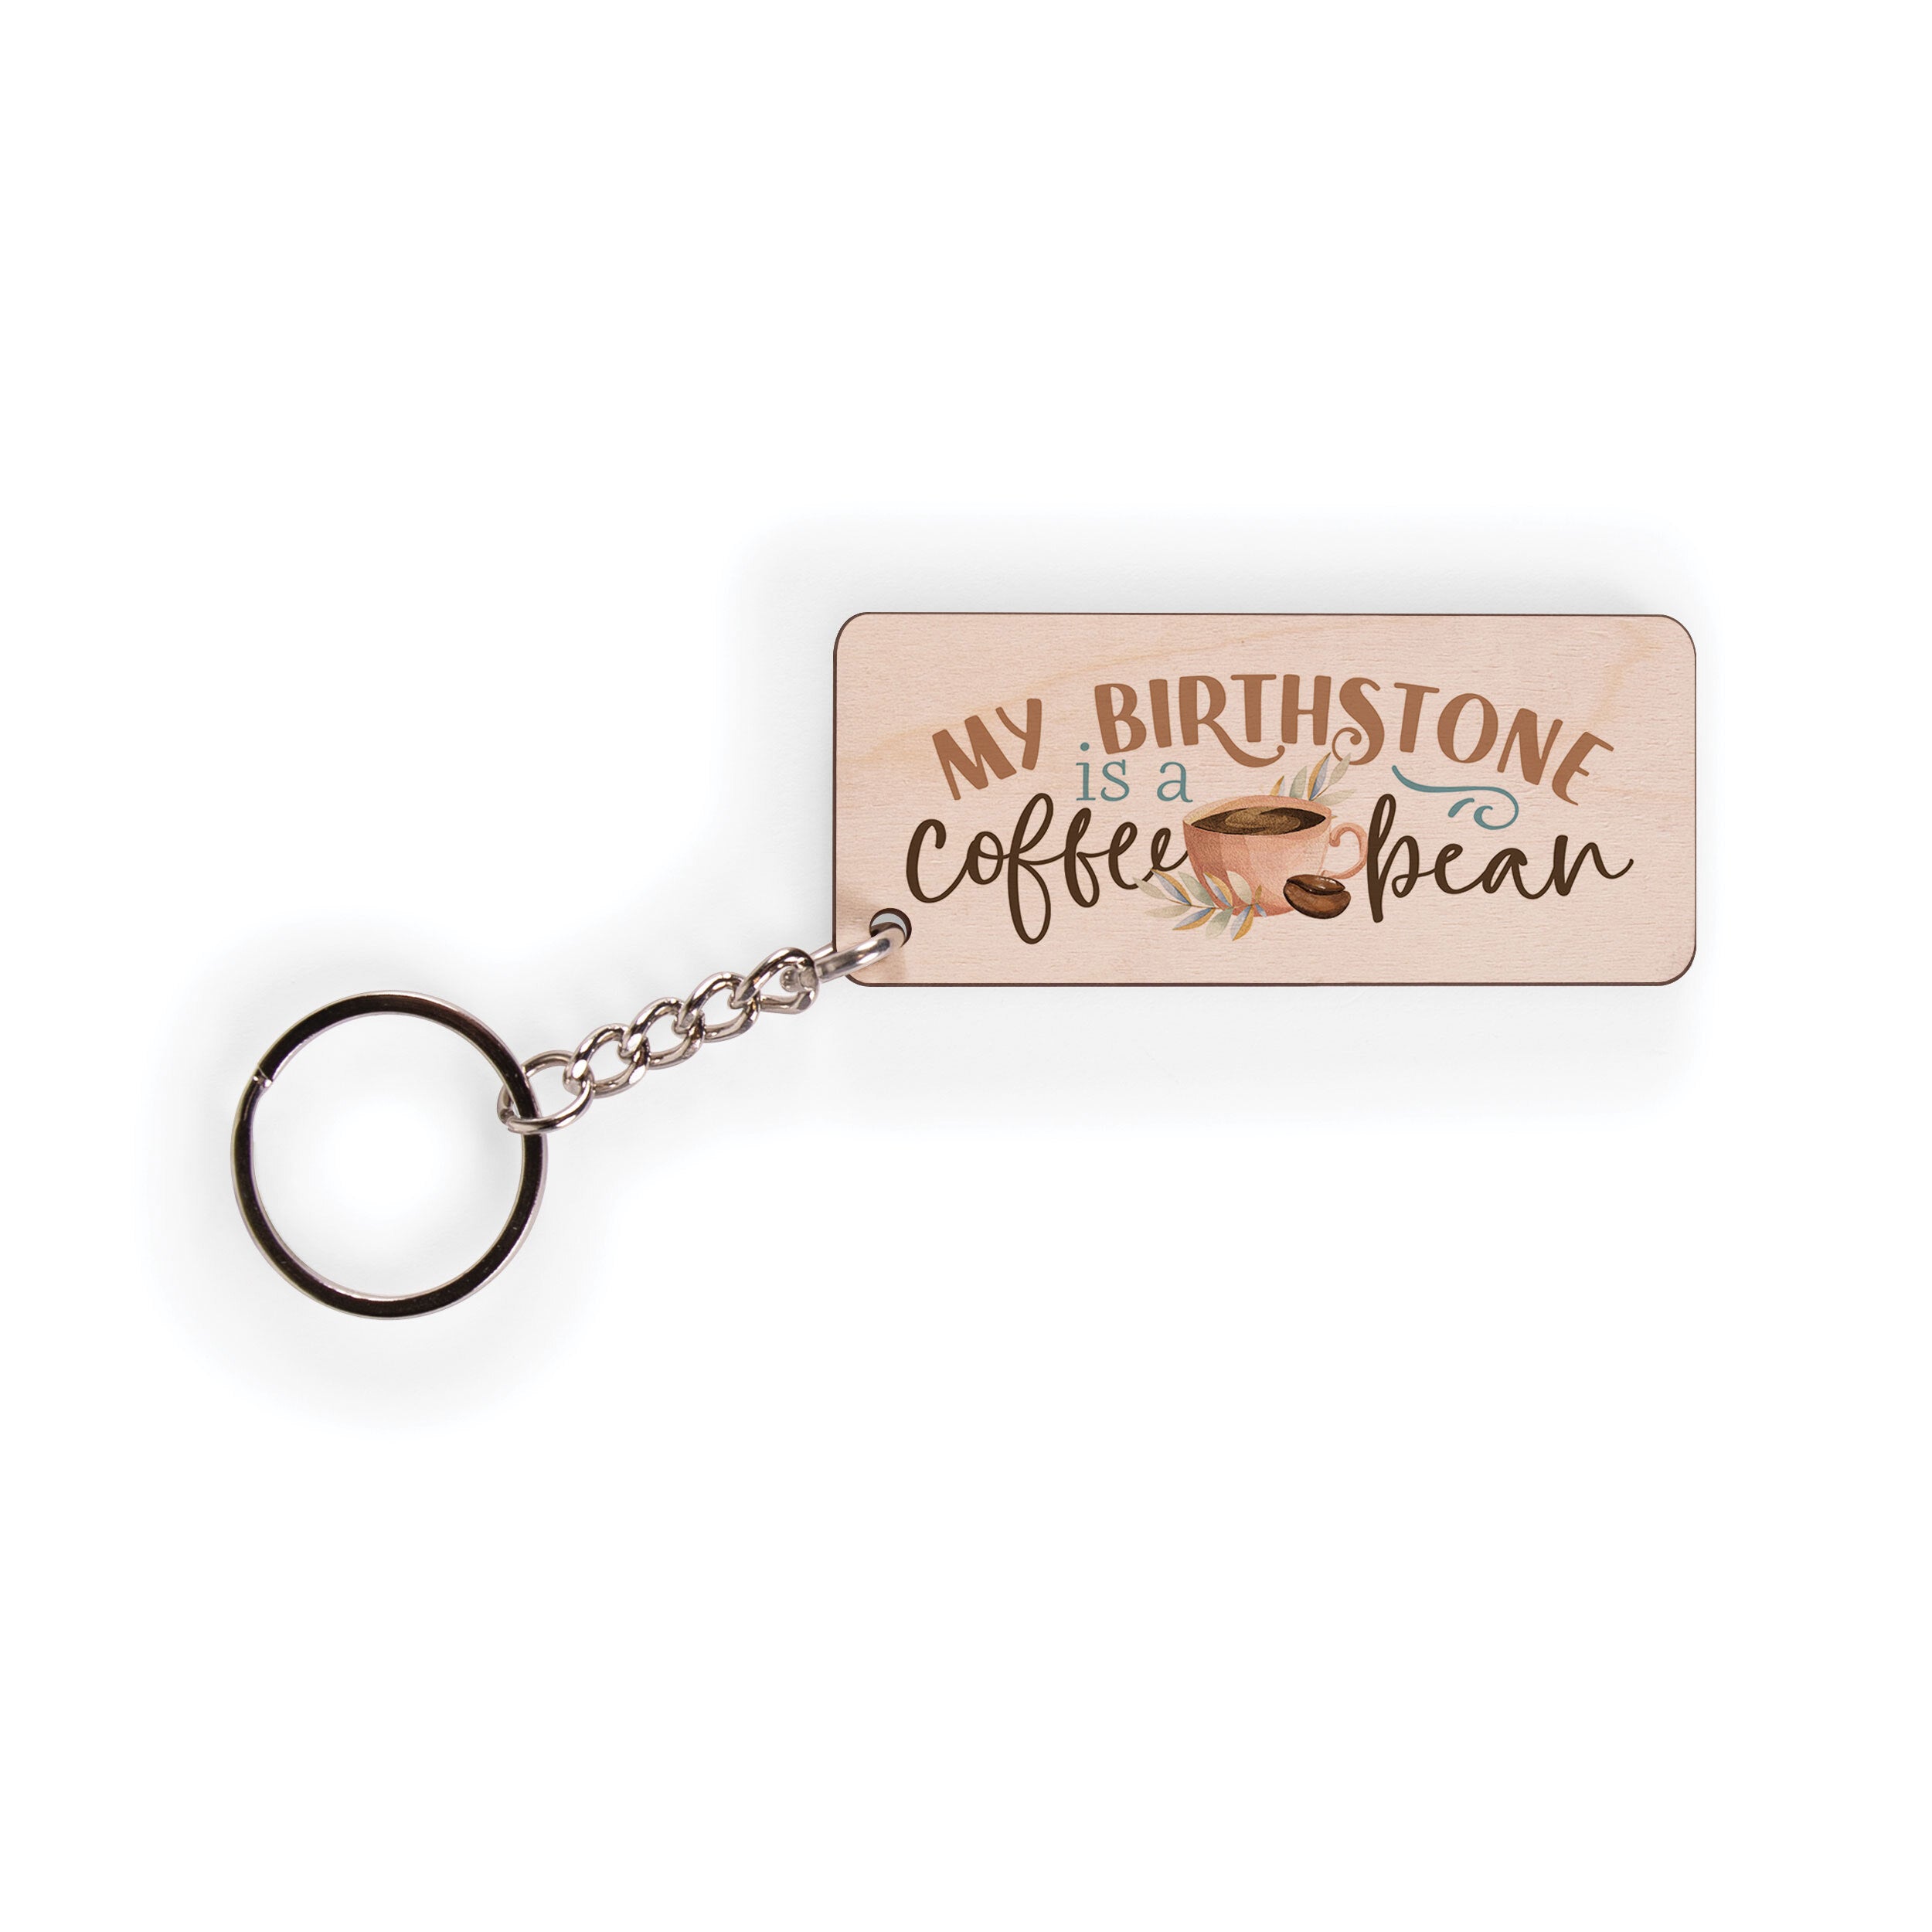 My Birthstone Is A Coffee Bean Maple Veneer Keychain